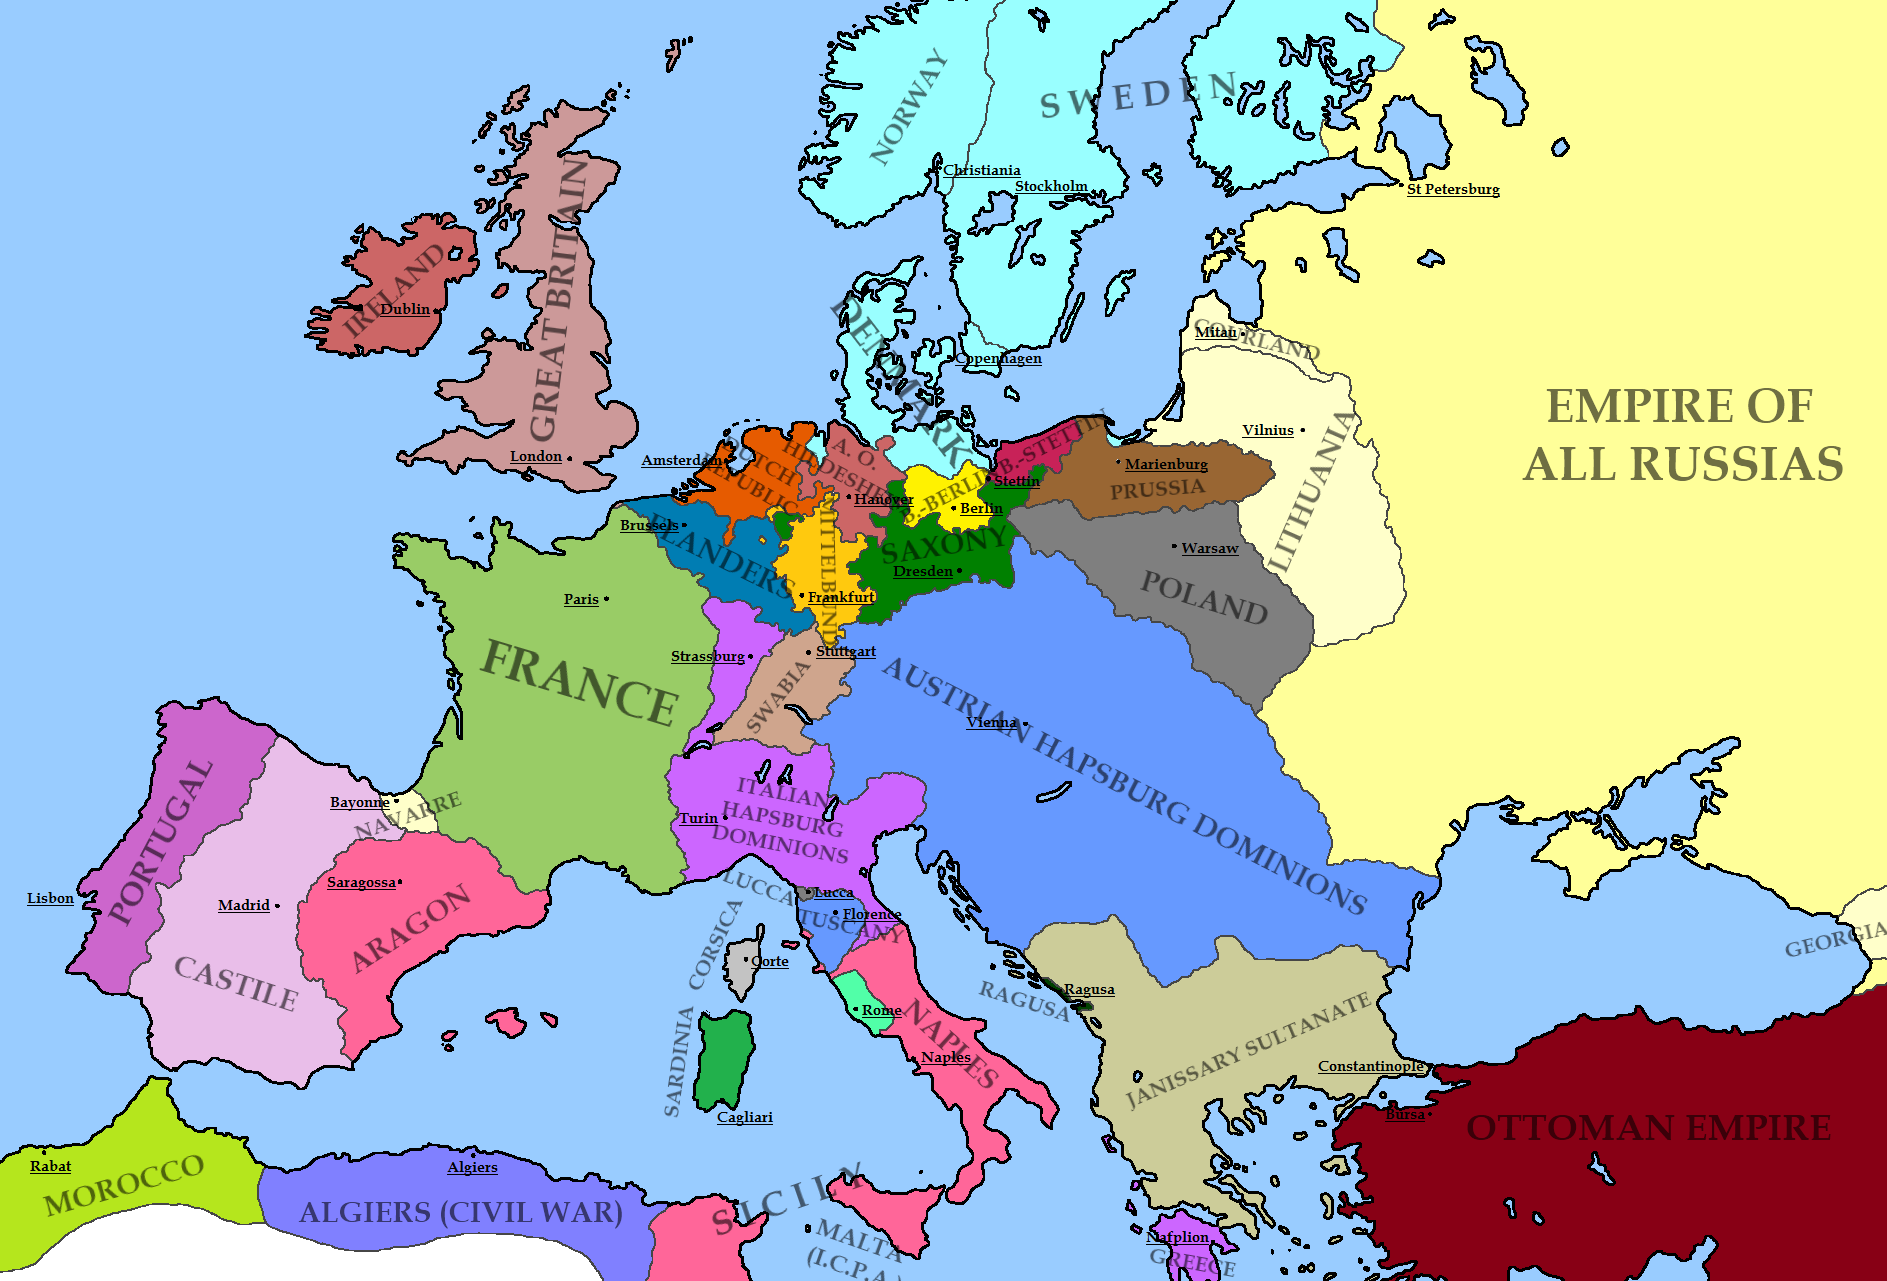 Держава габсбургов. Империя Габсбургов карта 16 век. Габсбургская монархия карта. Владения Габсбургов. Австрийская Империя Габсбургов карта.